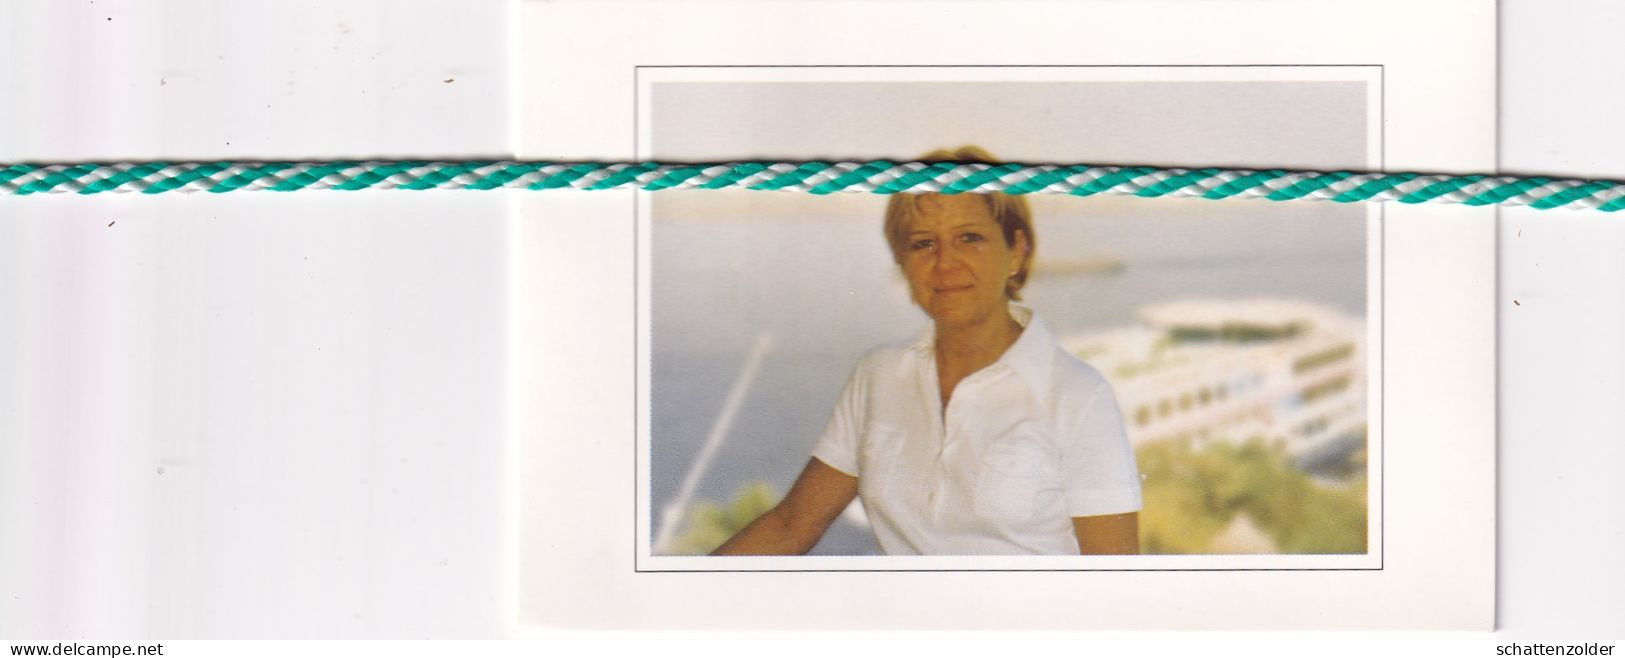 Martine De Schepper-Seghers, Sint-Niklaas 1957, 2003. Foto - Esquela